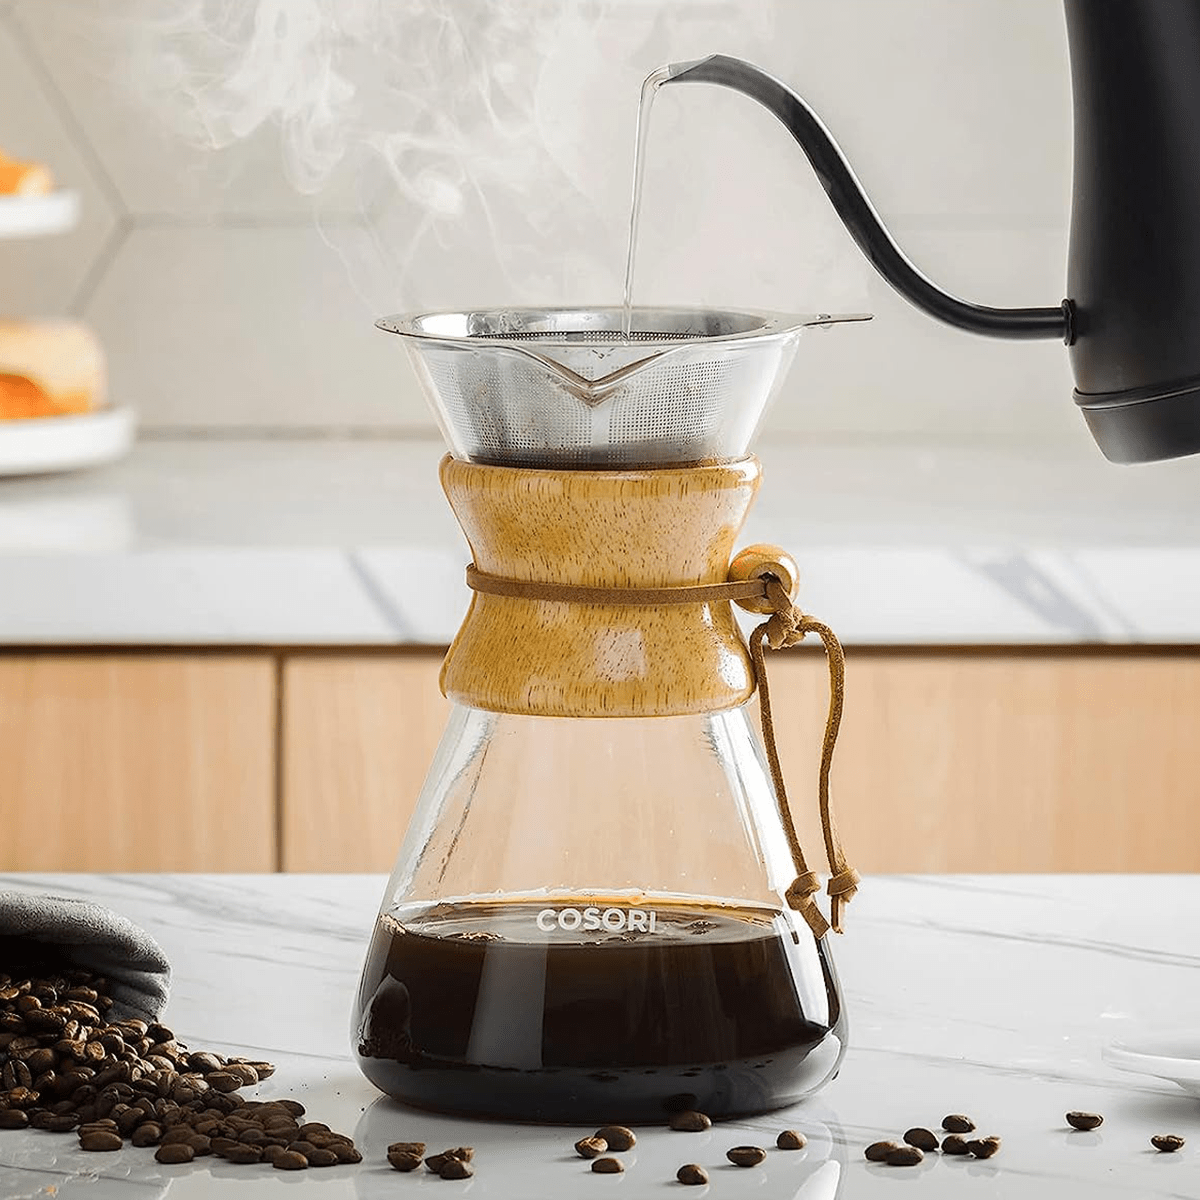 https://www.tasteofhome.com/wp-content/uploads/2022/04/cosori-pour-over-coffee-maker-via-amazon.com-ecomm.png?fit=700%2C700